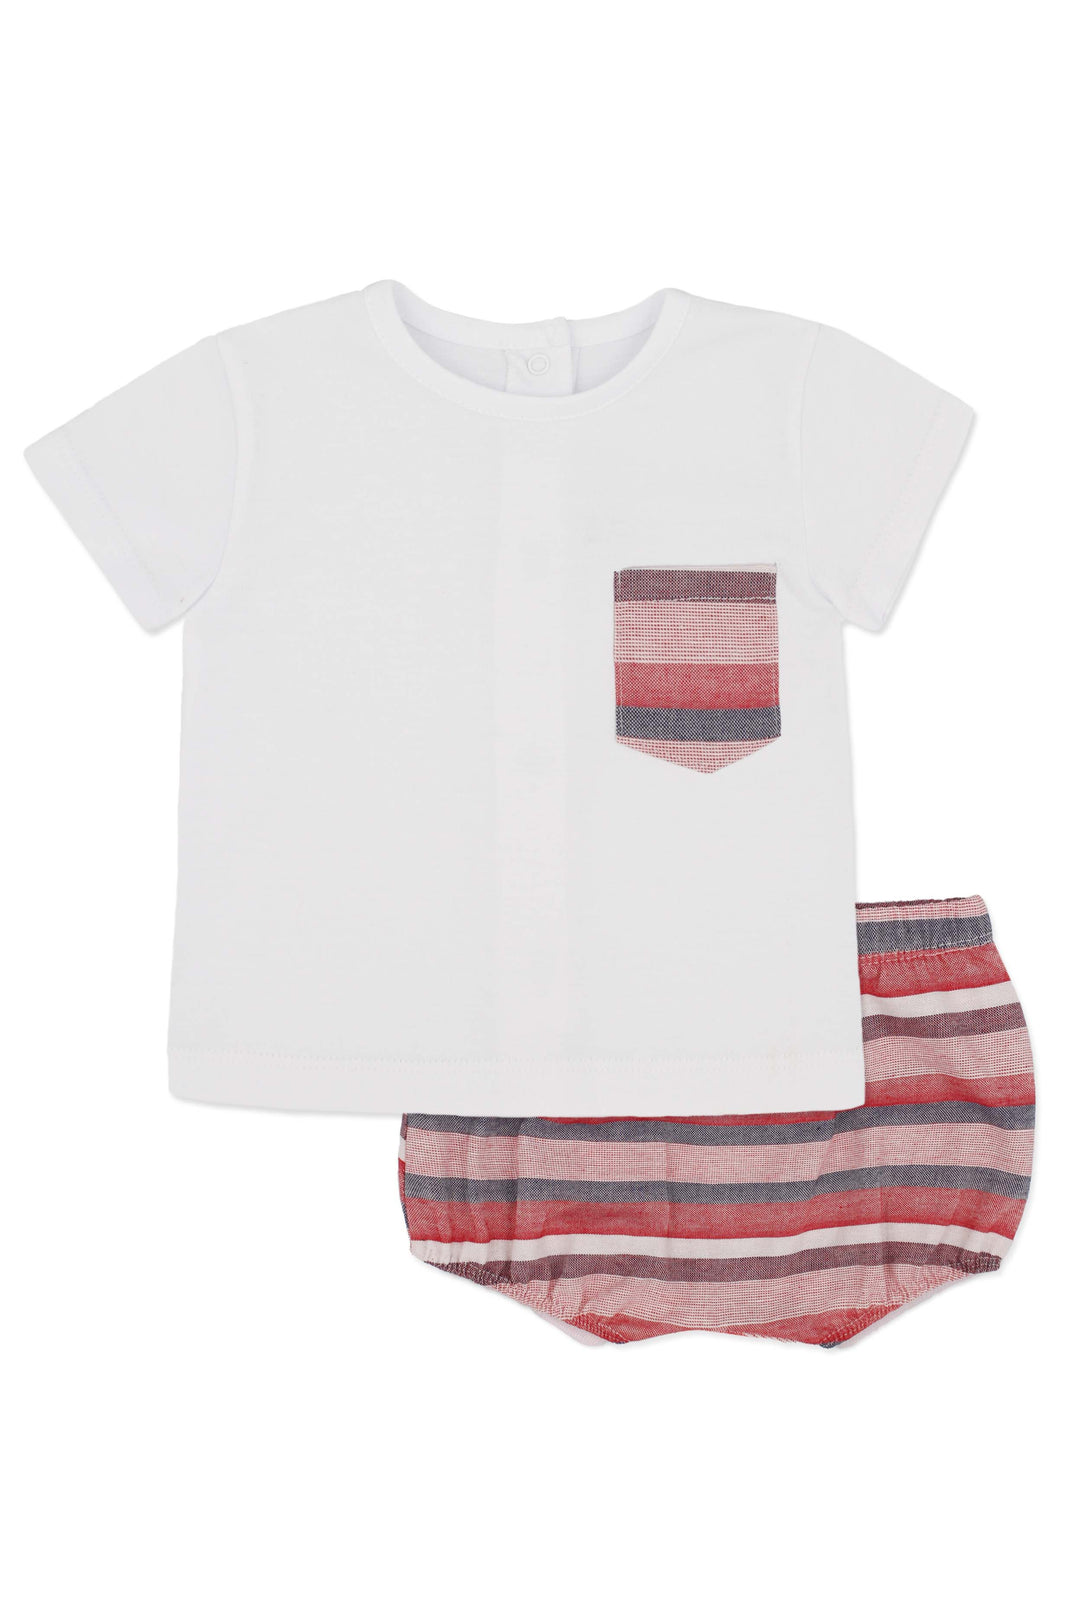 Rapife "Wyatt" Red Stripe T-Shirt & Jam Pants | Millie and John